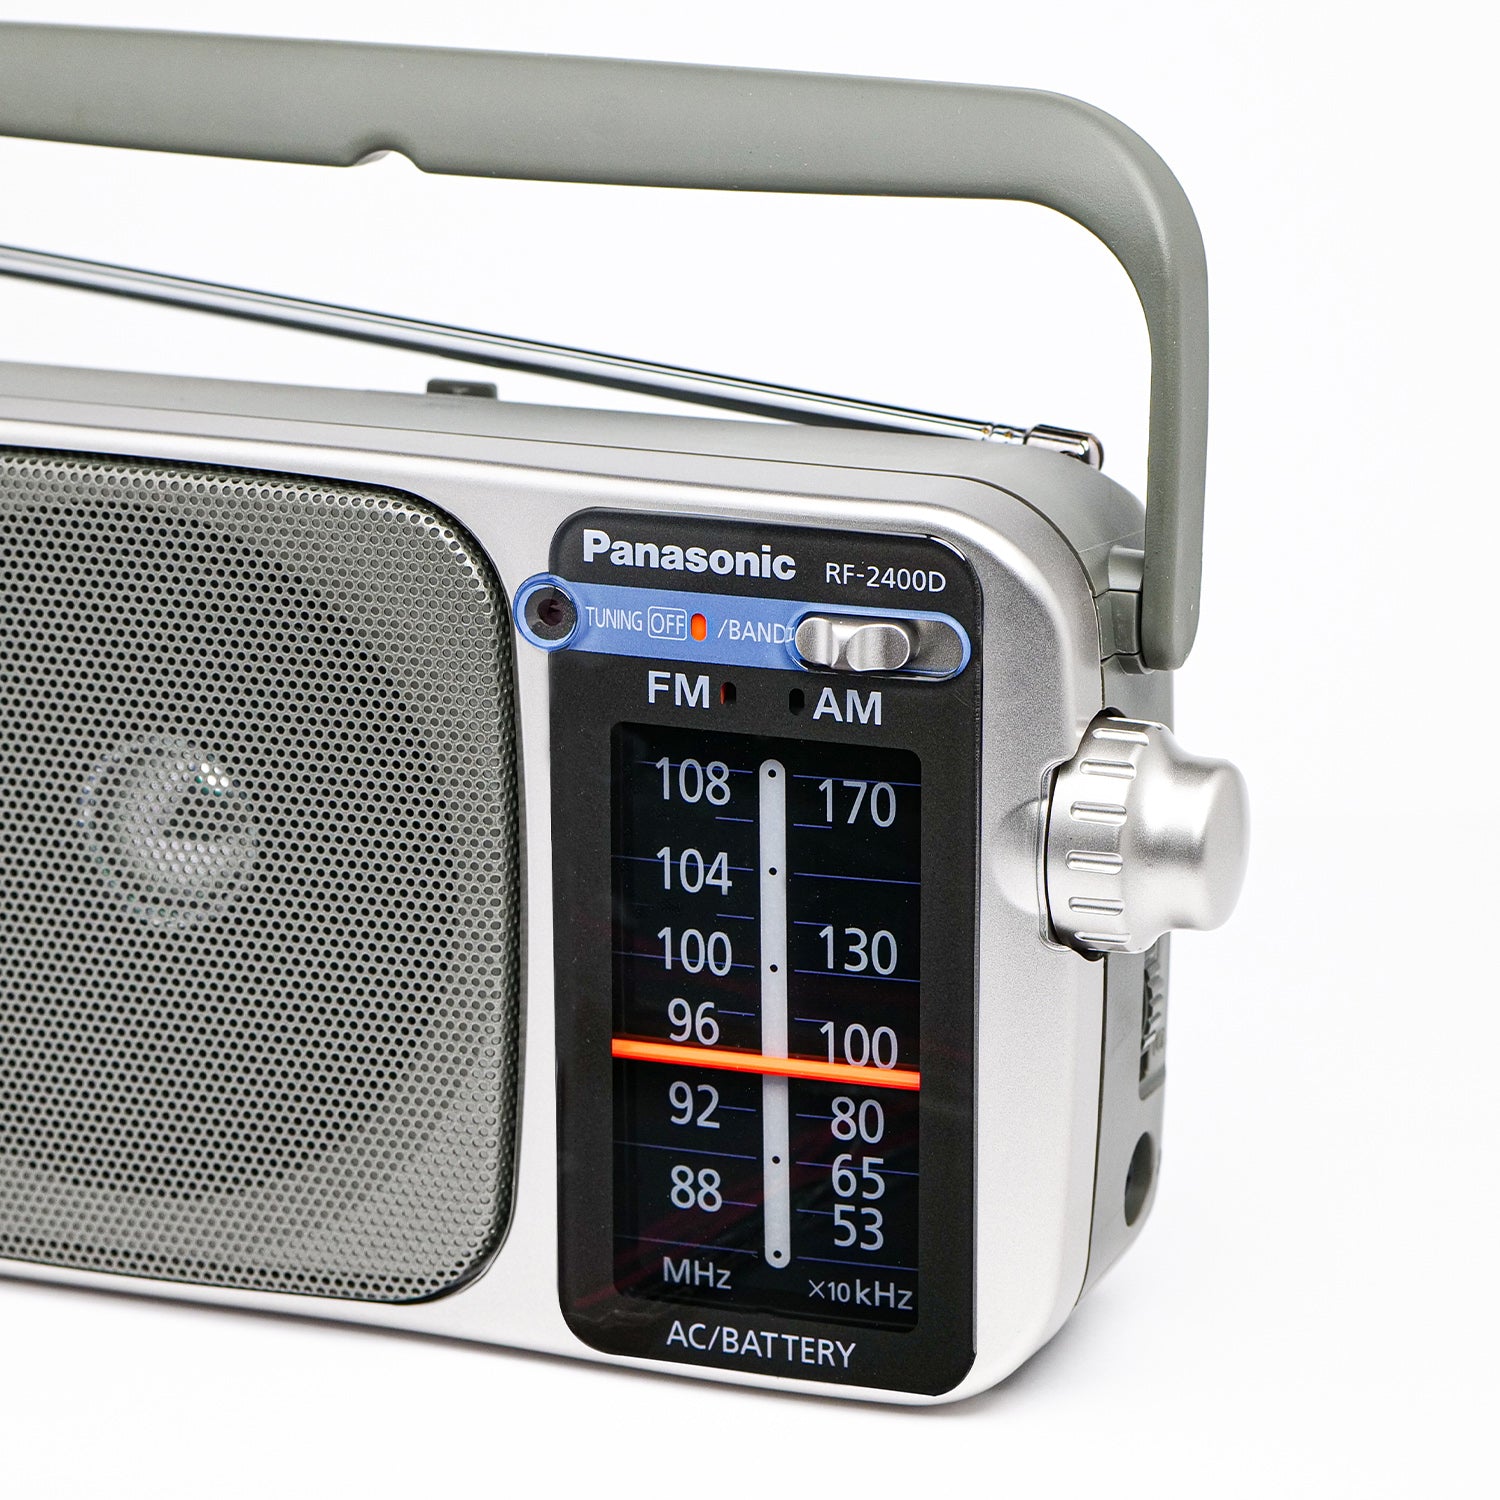 Panasonic Portable Am FM Radio Battery Operated Analog AC Power Silver  RF-2400D 